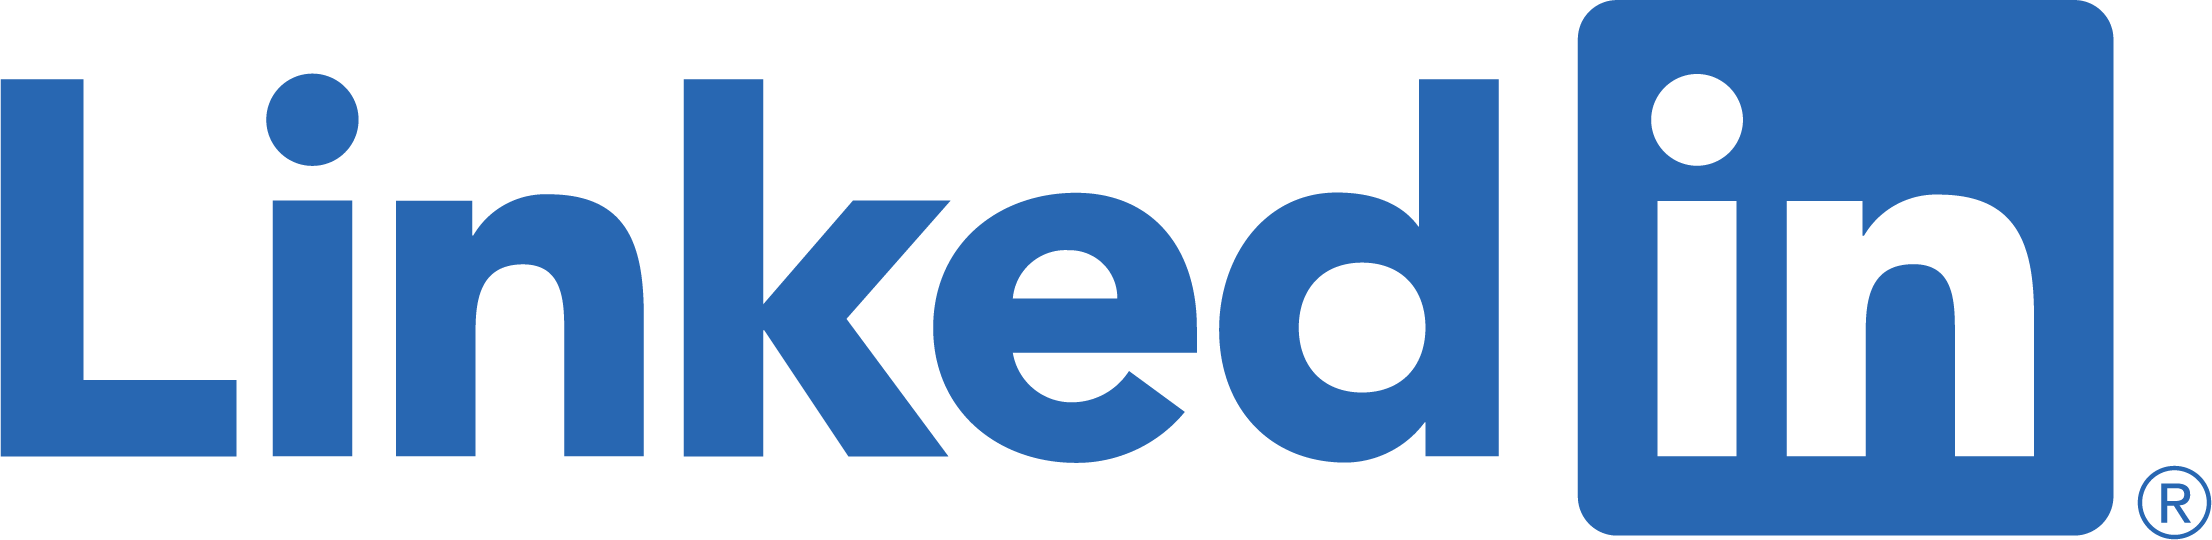 Linkedin logo with a link to Linkedin